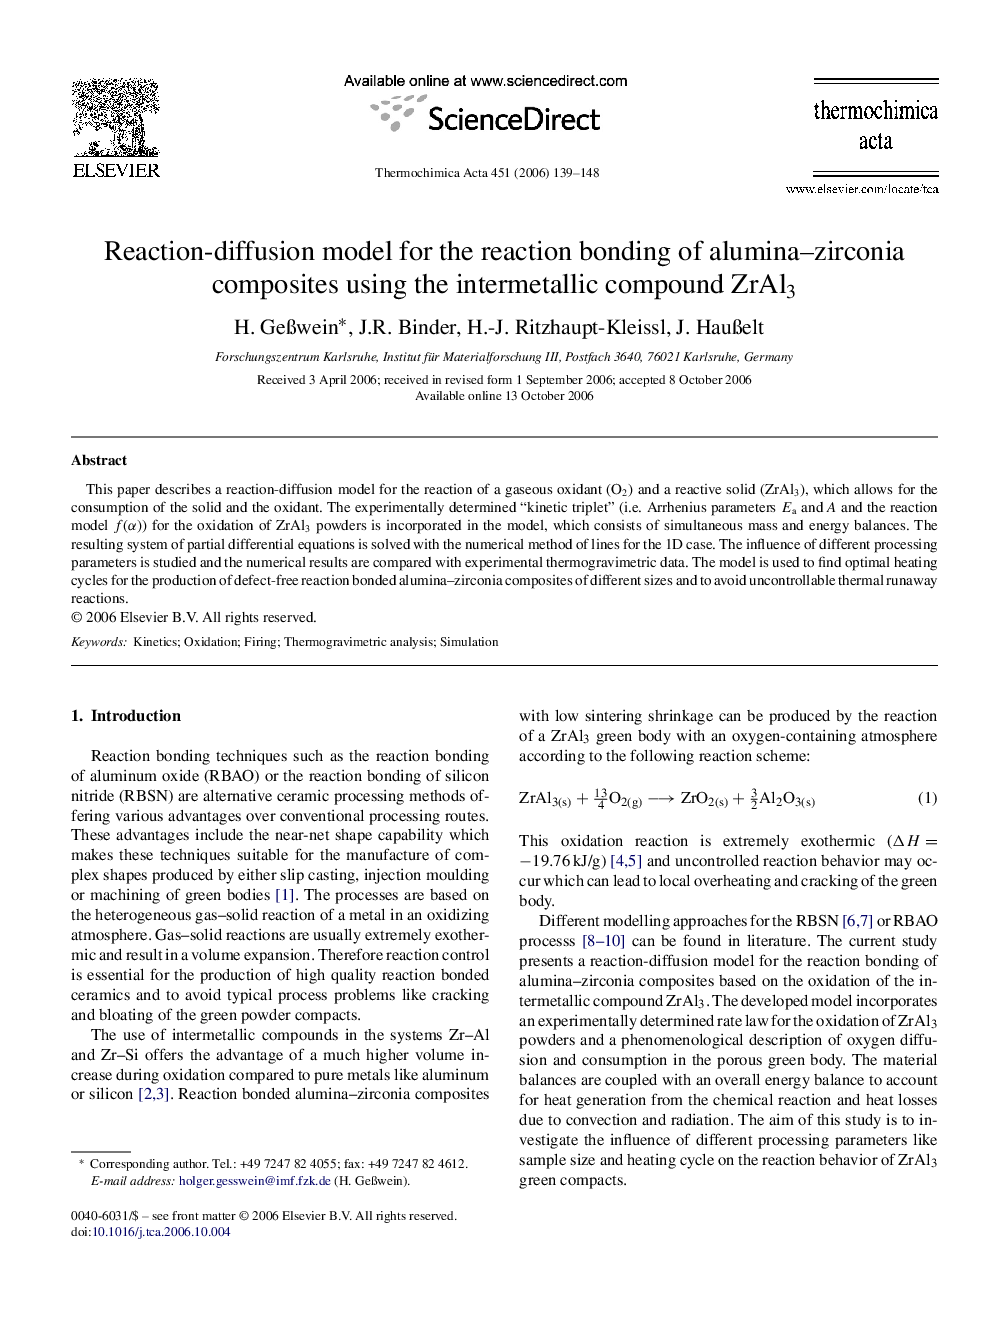 Reaction-diffusion model for the reaction bonding of alumina-zirconia composites using the intermetallic compound ZrAl3